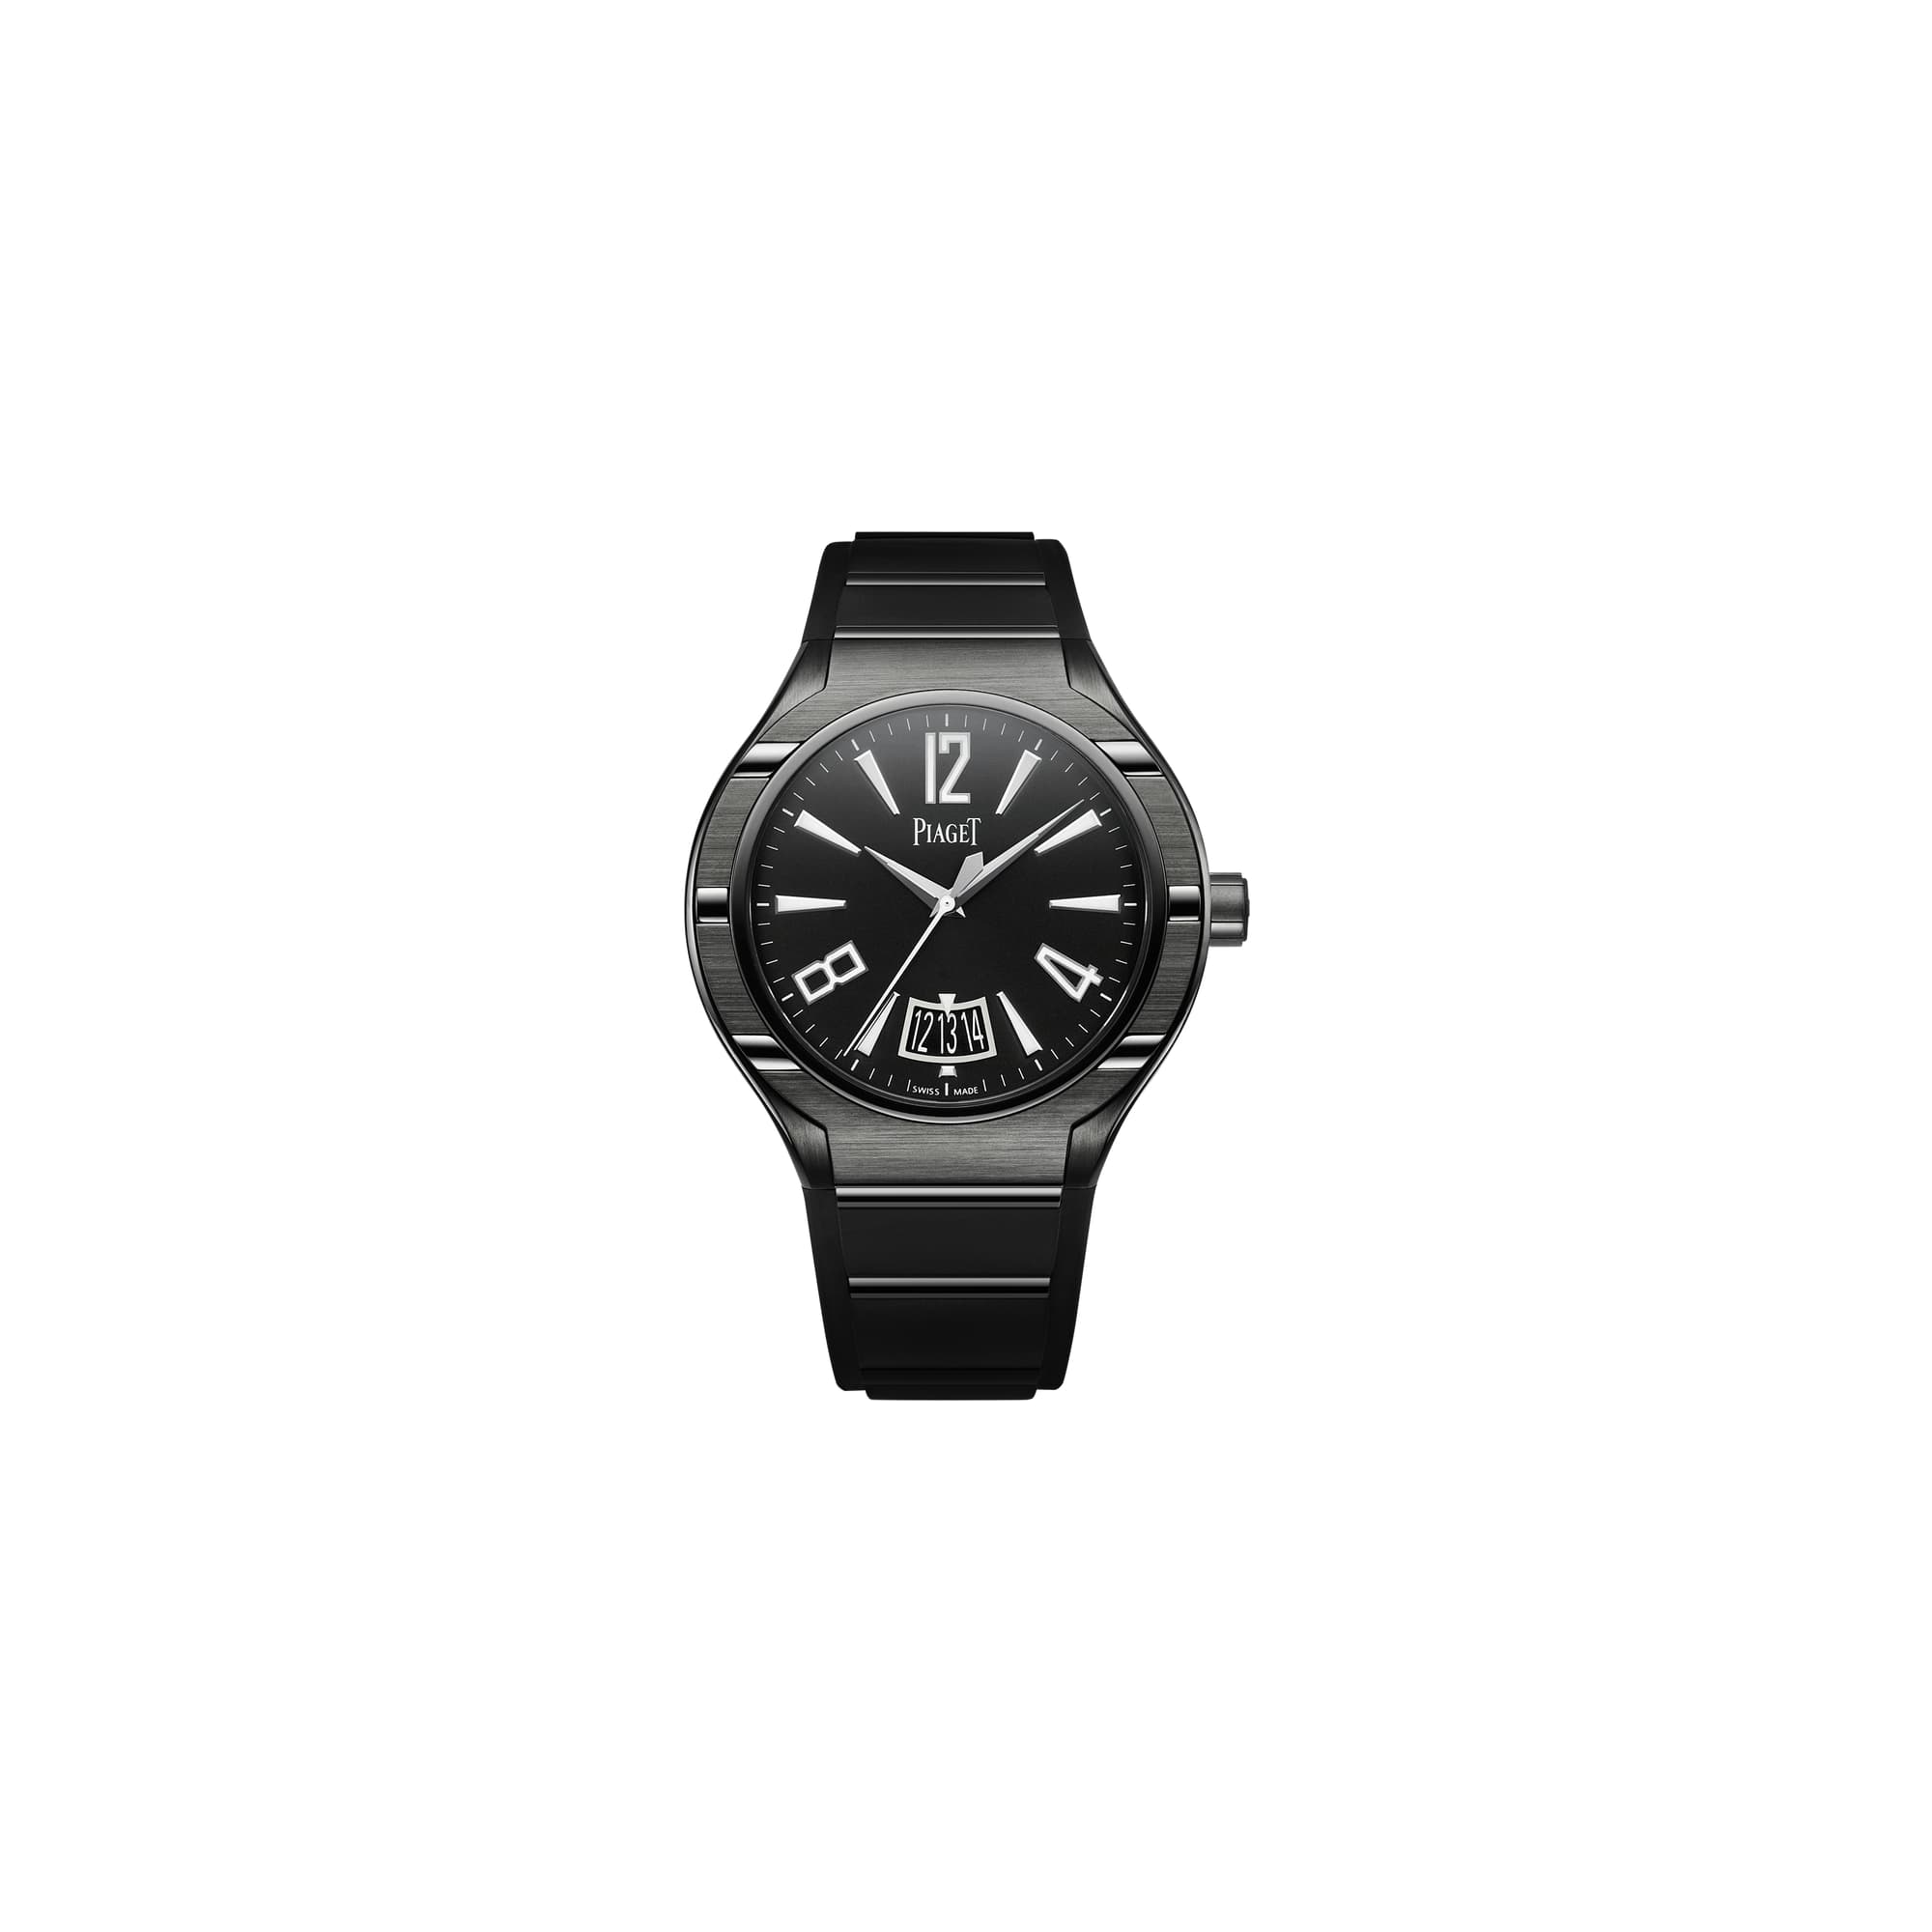 Automatic watch in titanium - Piaget luxury men’s watch G0A37003